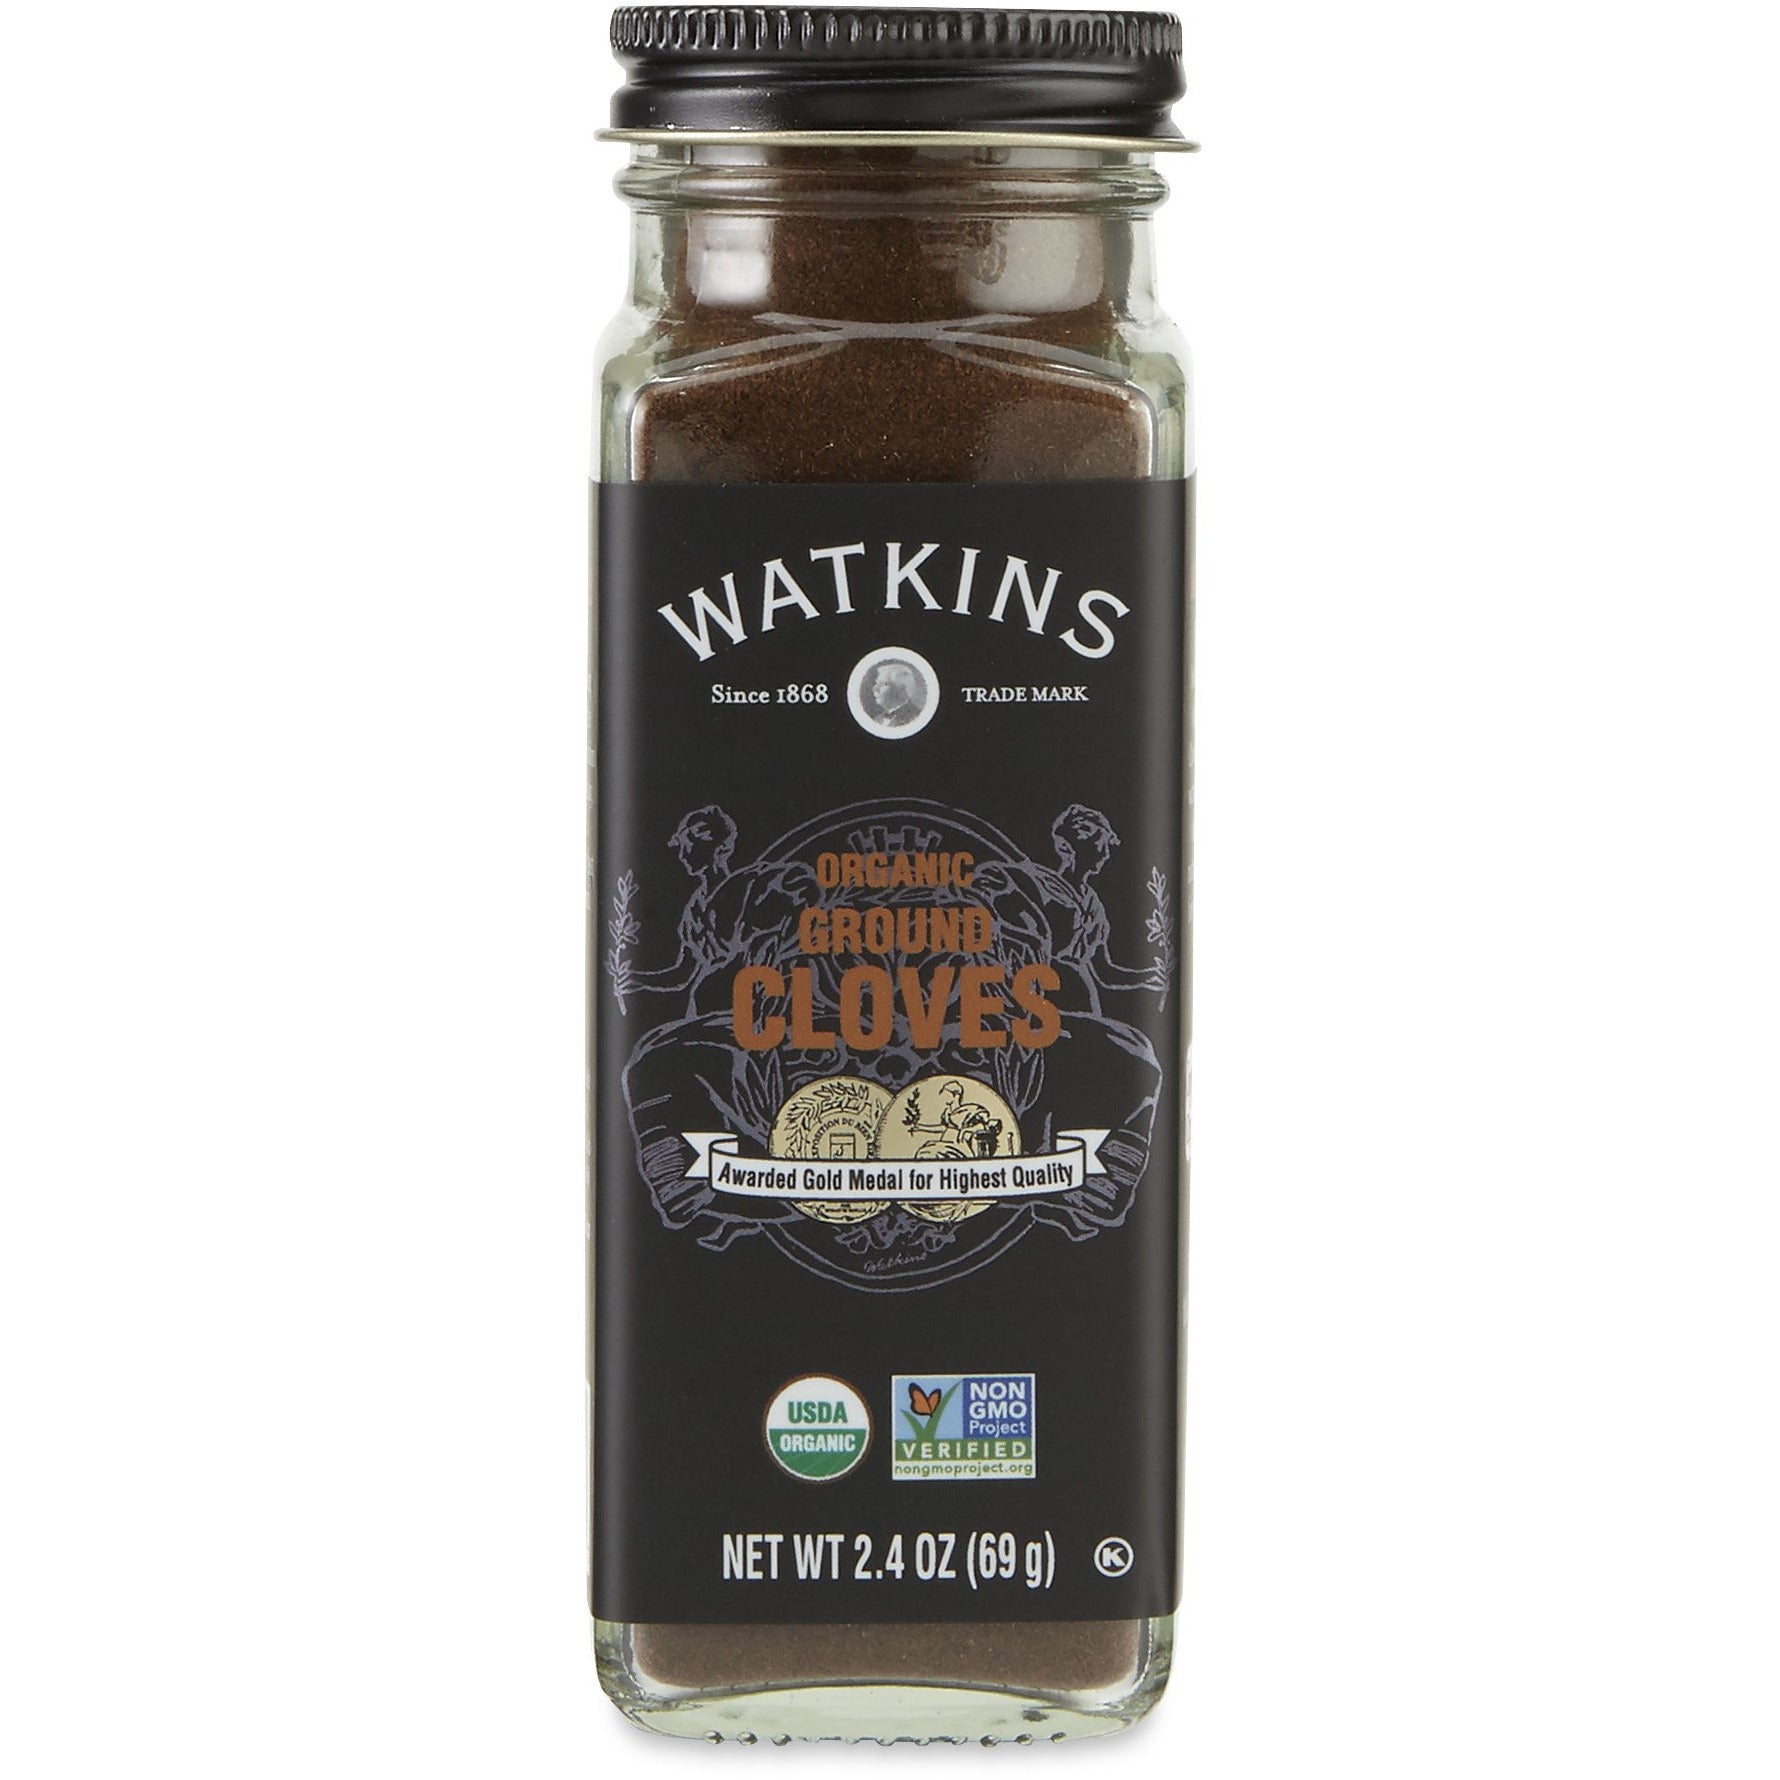 Watkins Gourmet Organic Spice Jar, Ground Cloves (2.4 oz)